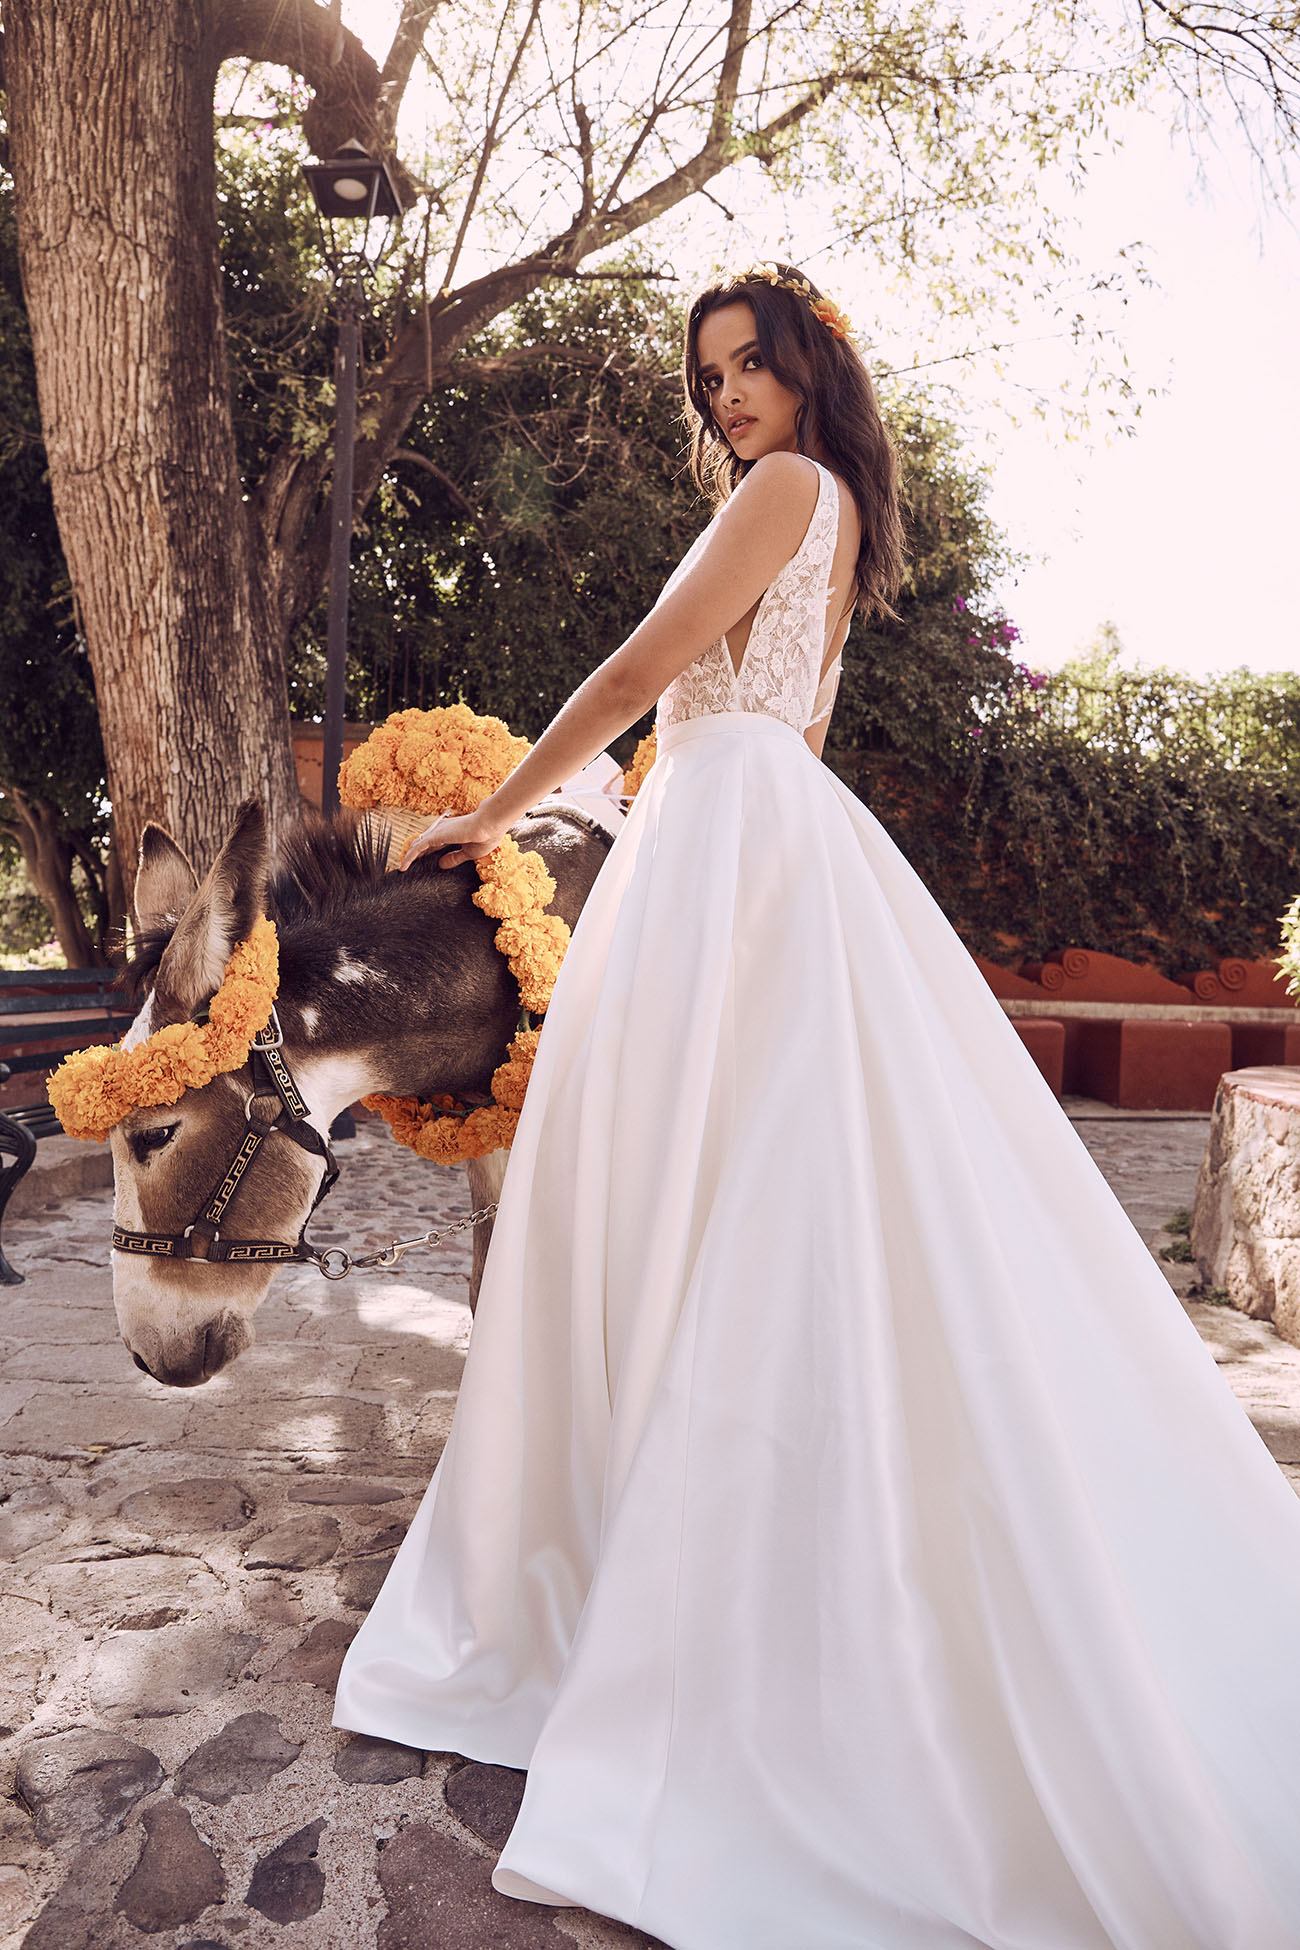 Introducing the Tara Lauren 2020 Collection: romantic, fresh, elevated bohemian wedding dresses.